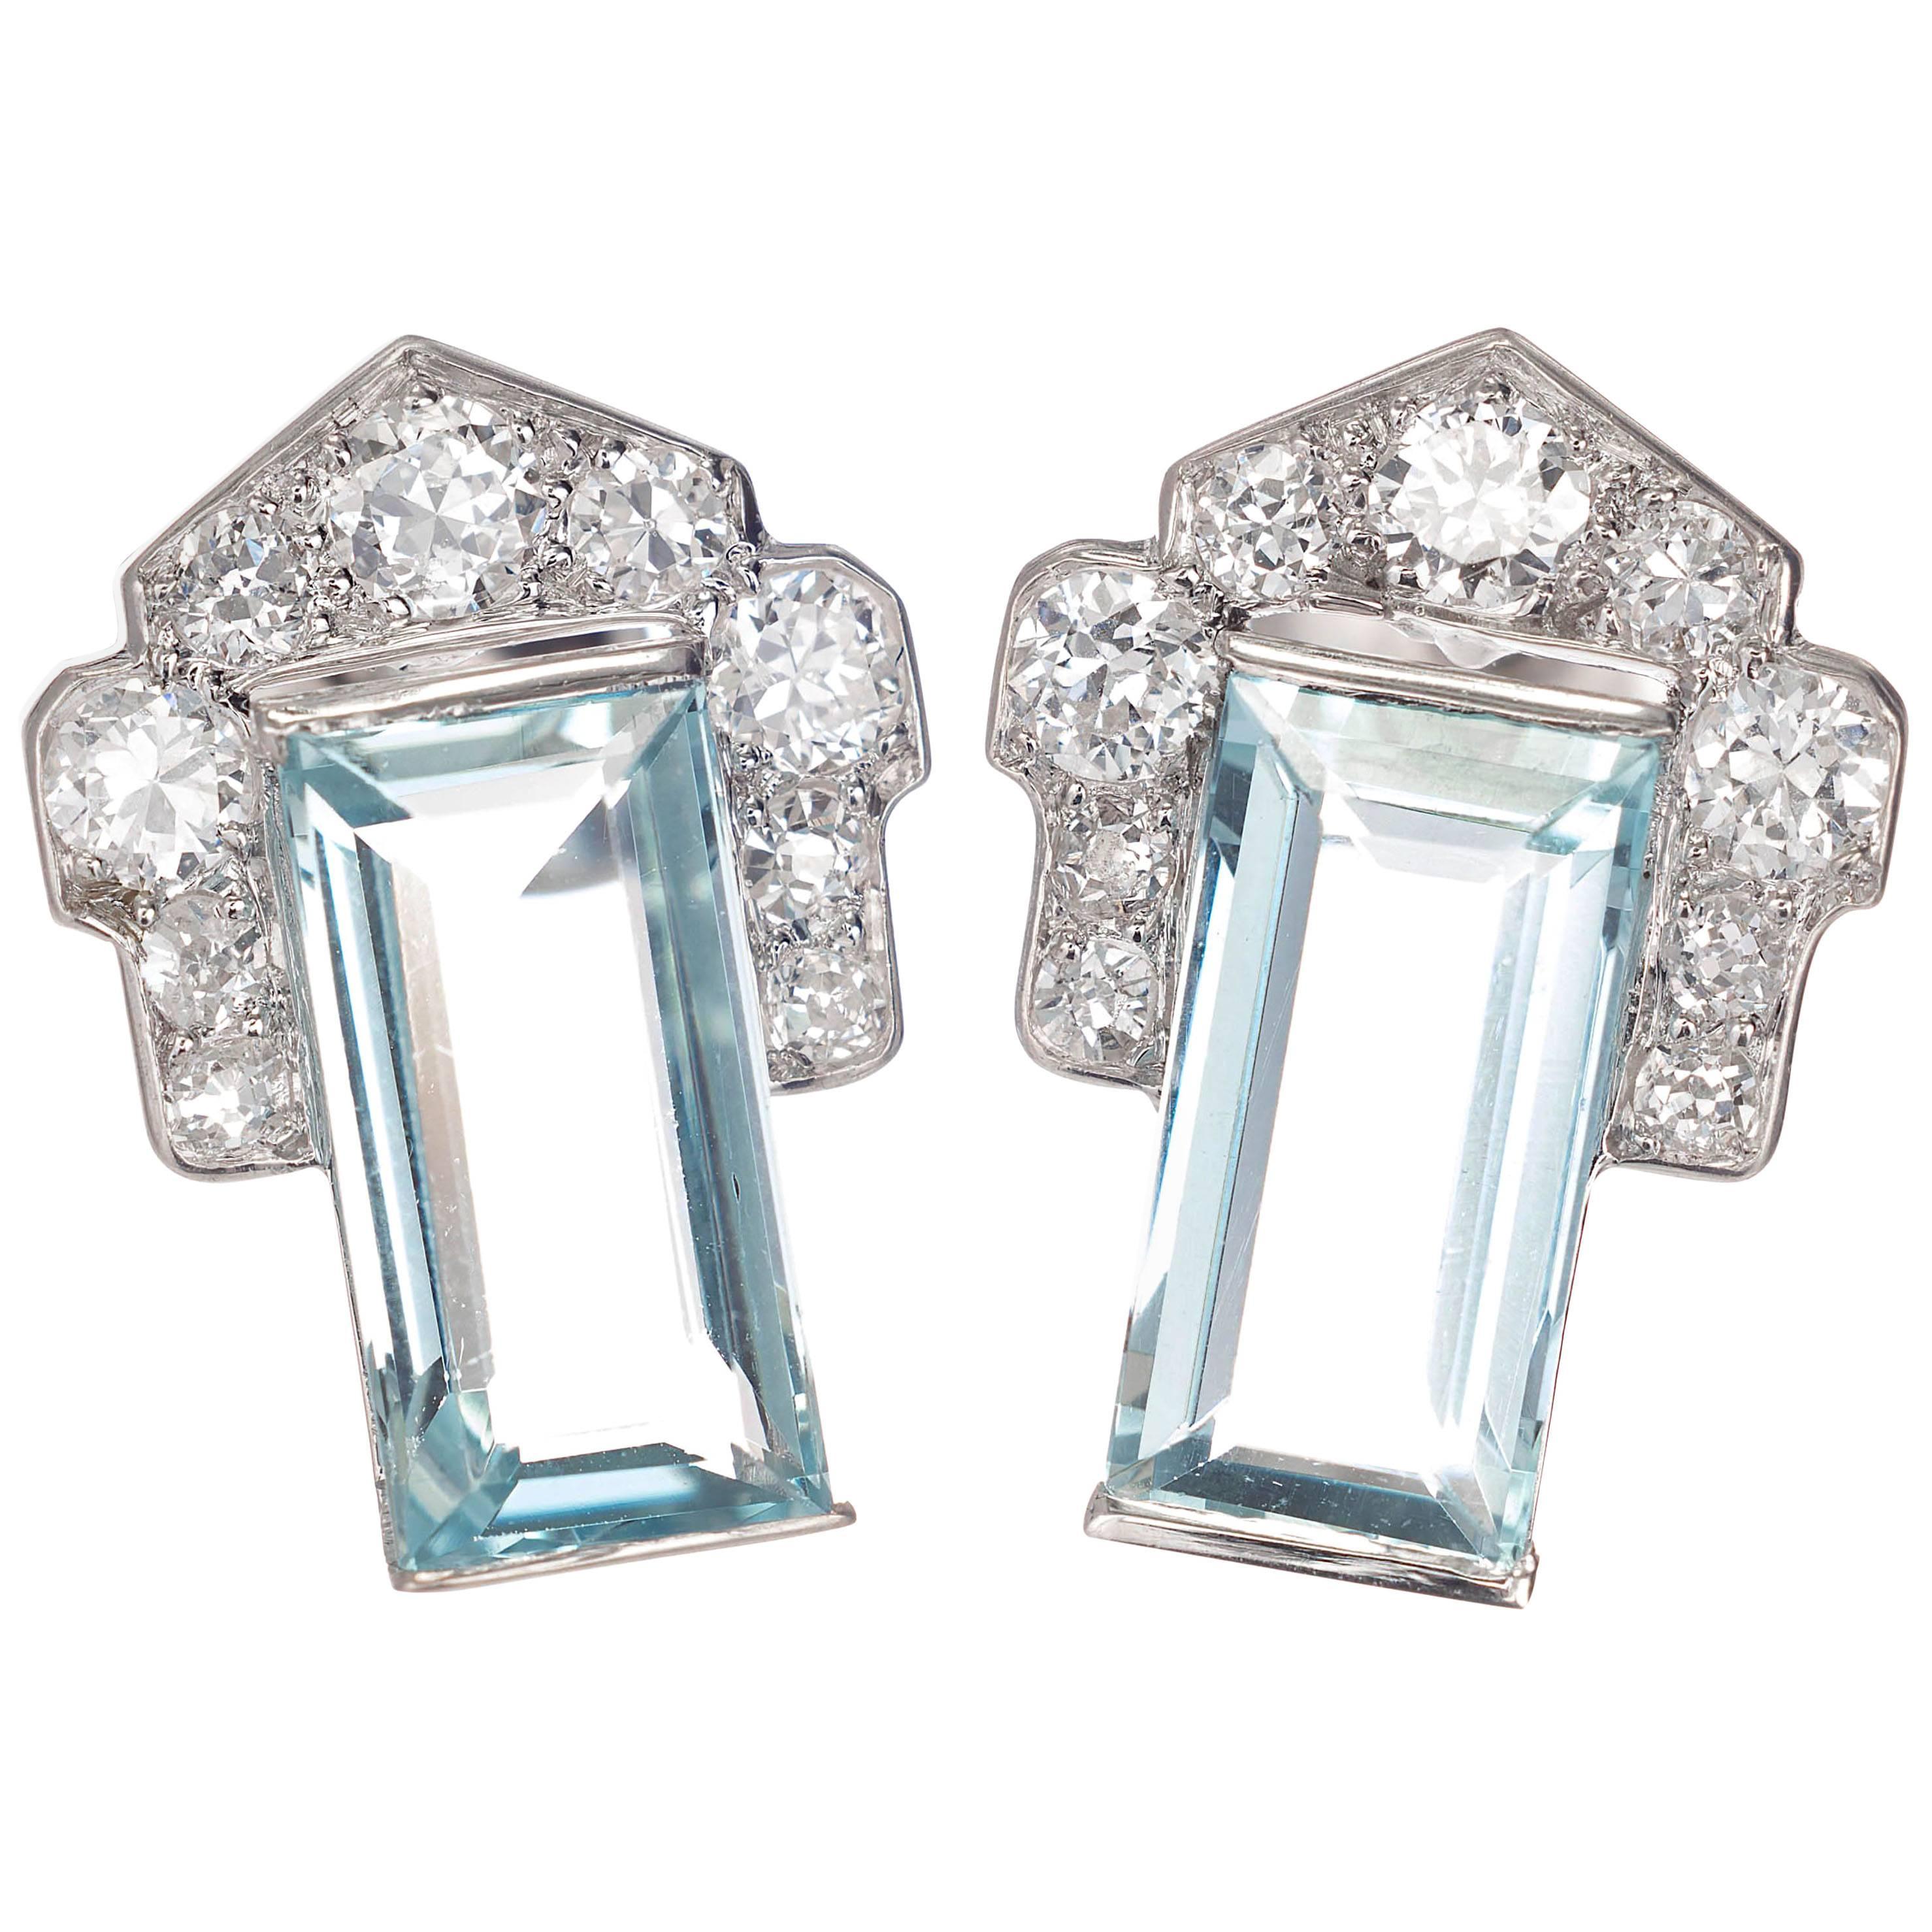 3.40 Carat Aqua Diamond Art Deco Cluster Earrings